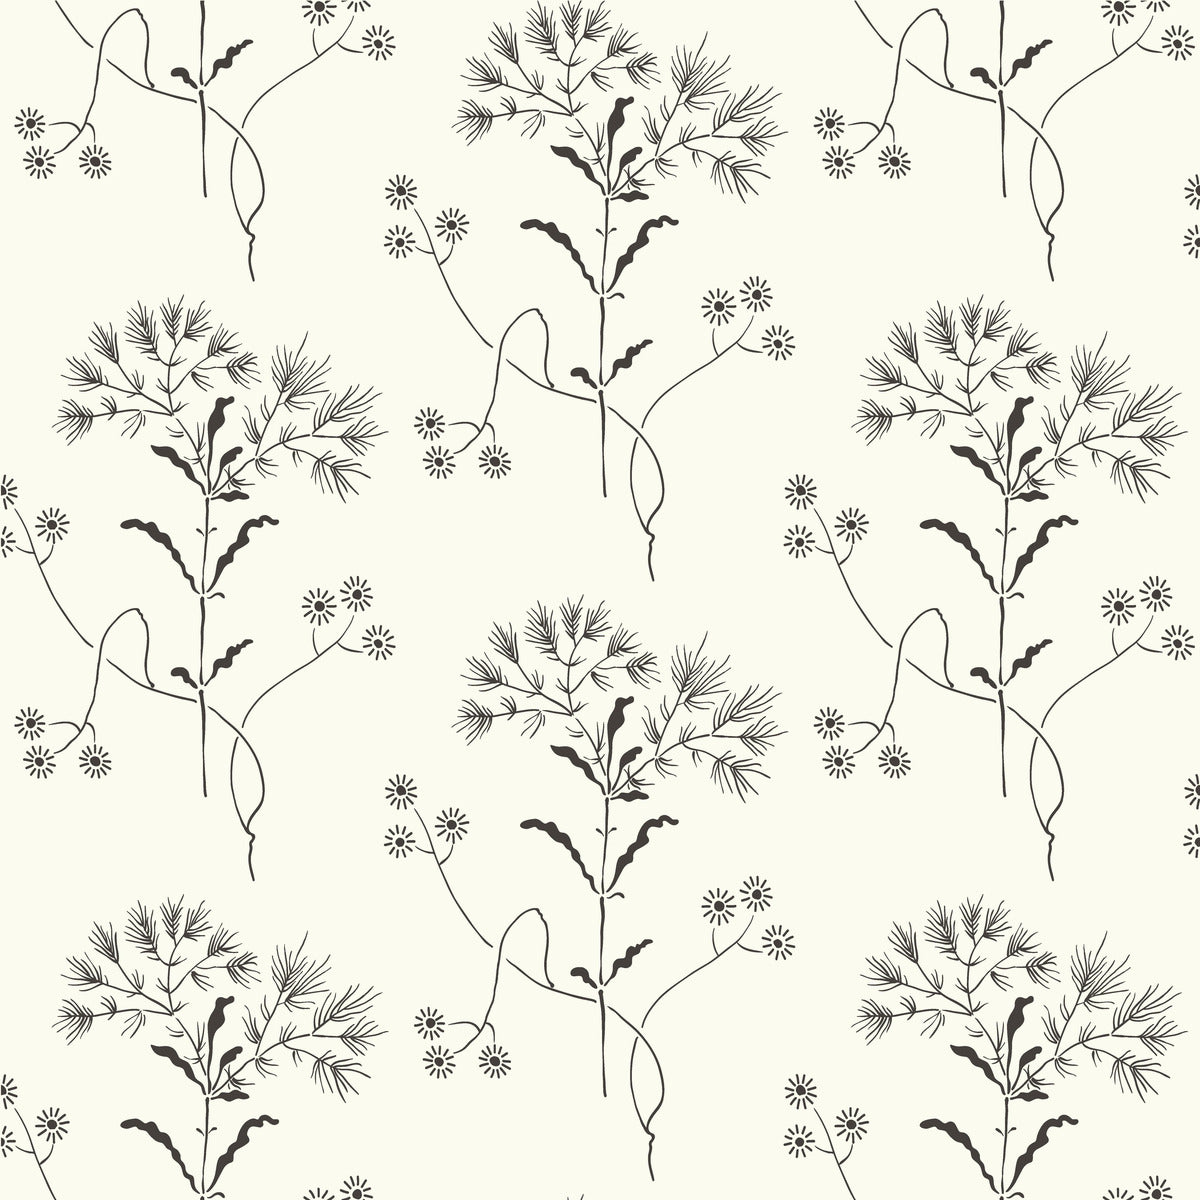 Magnolia Home Wildflower Peel & Stick Wallpaper - Black & White